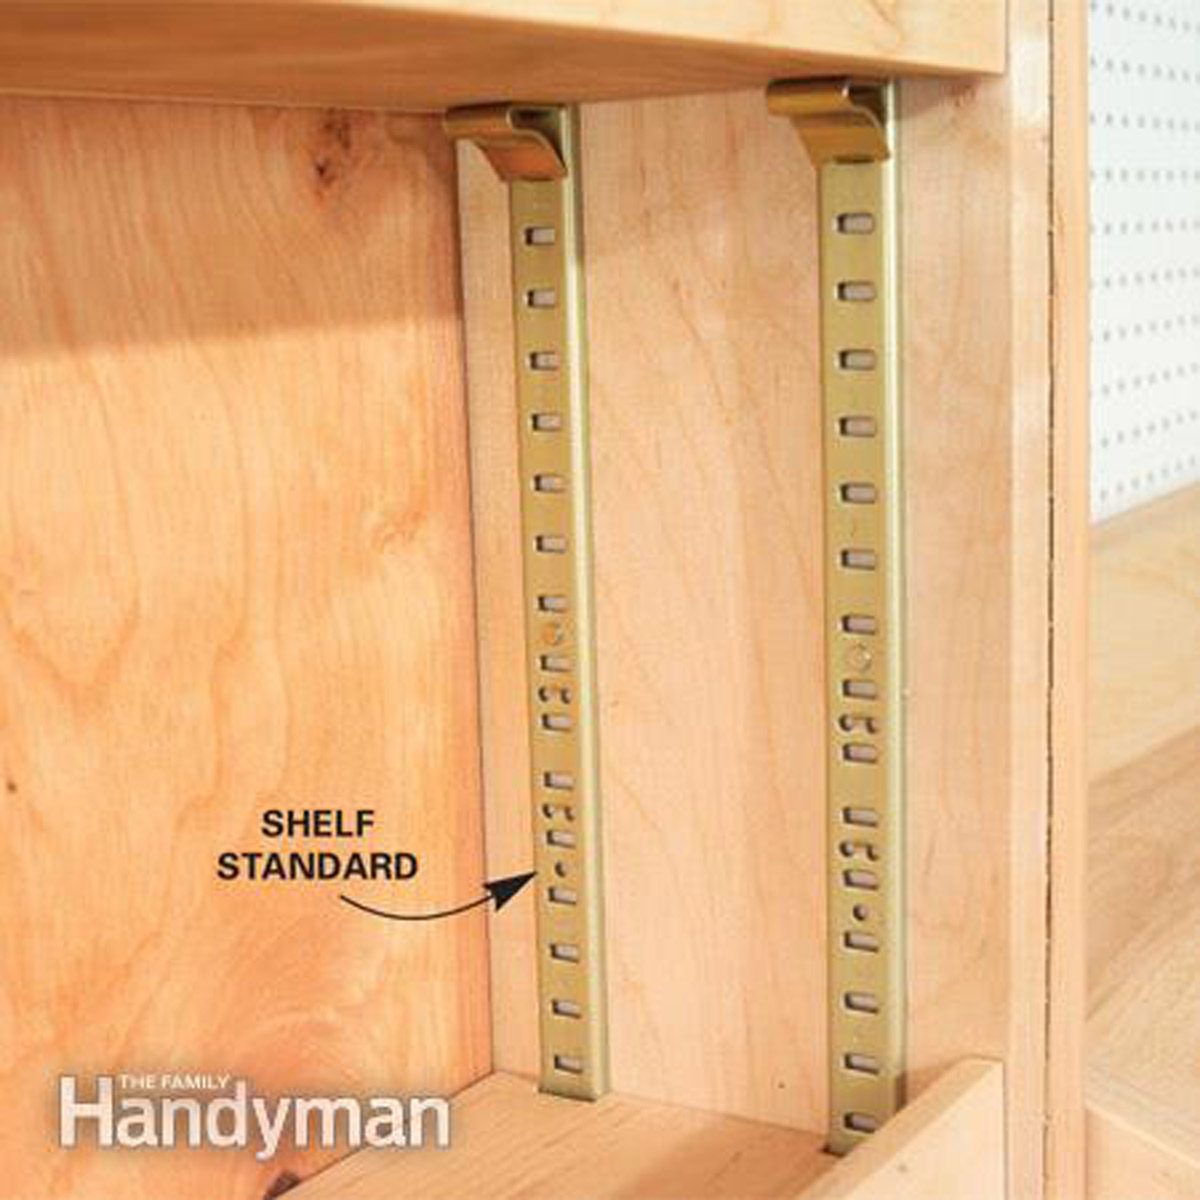 Adjustable shelves simplify building